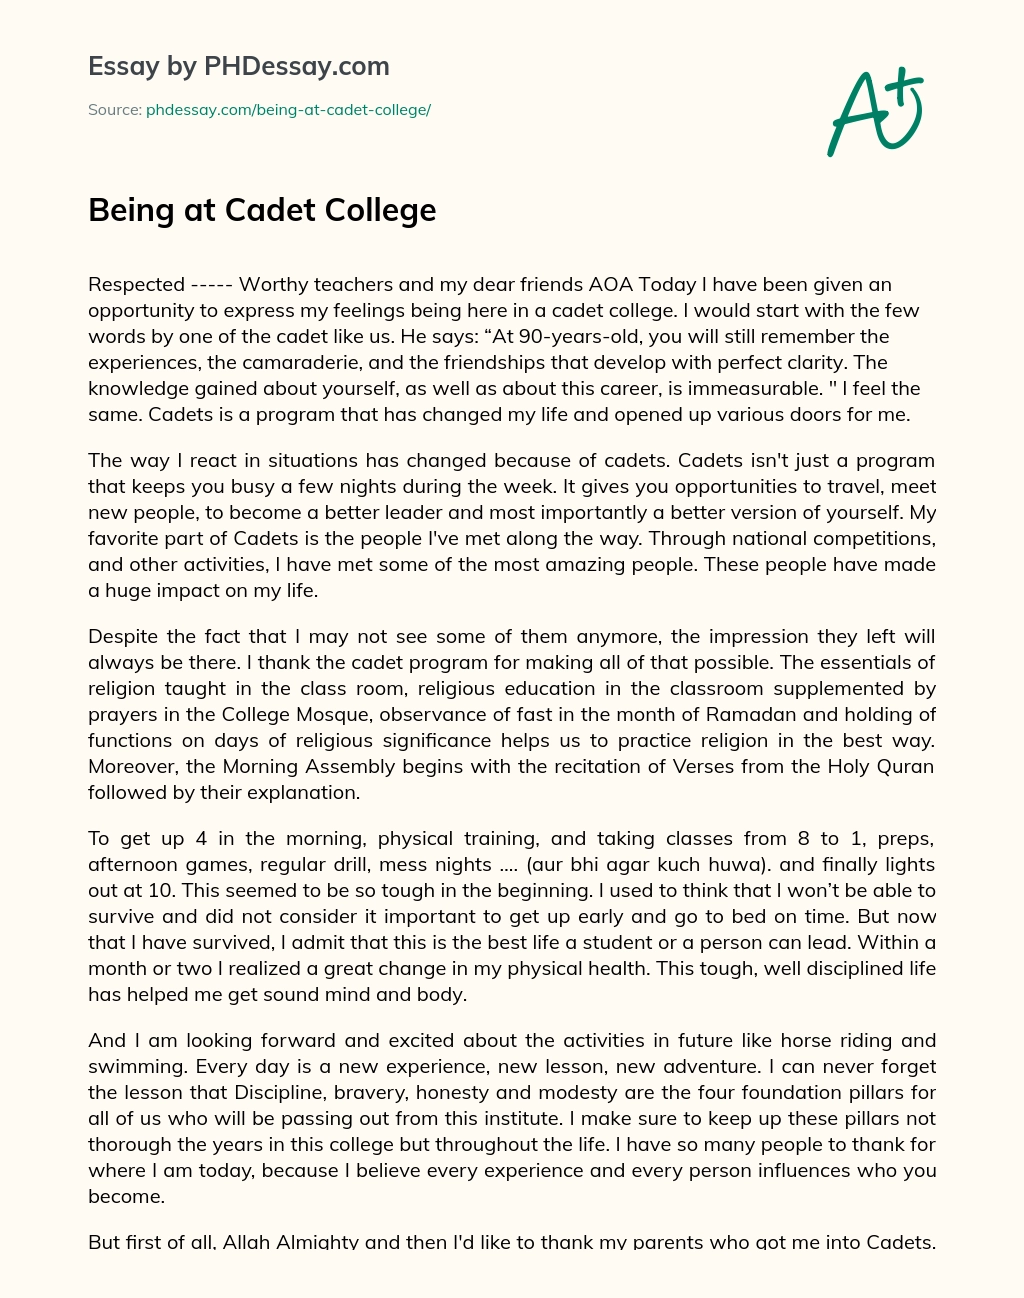 life of cadet college essay